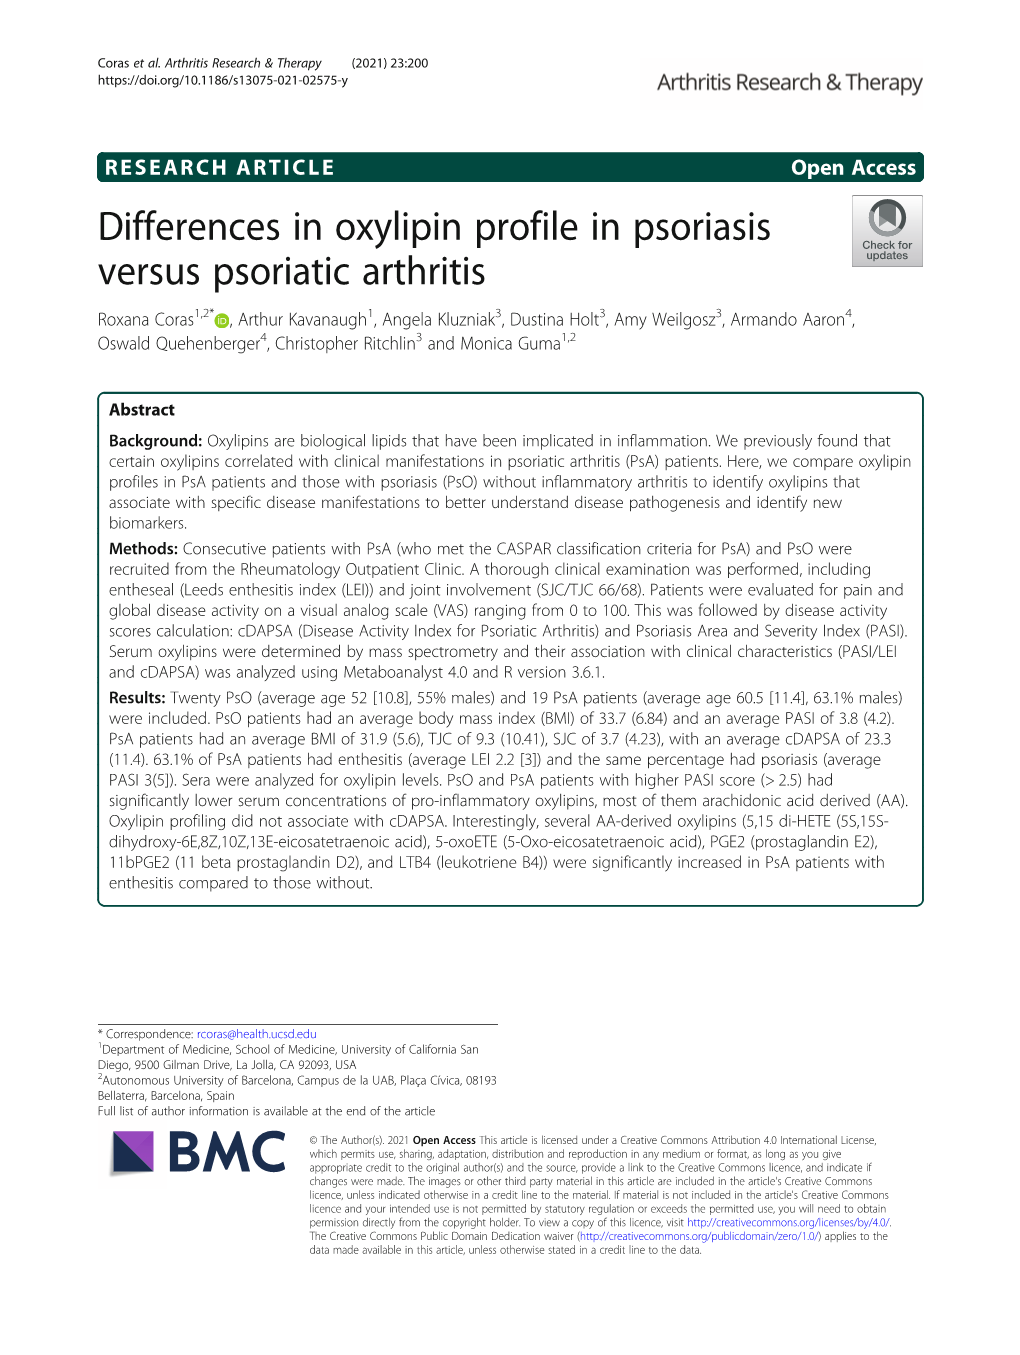 Differences in Oxylipin Profile in Psoriasis Versus Psoriatic Arthritis